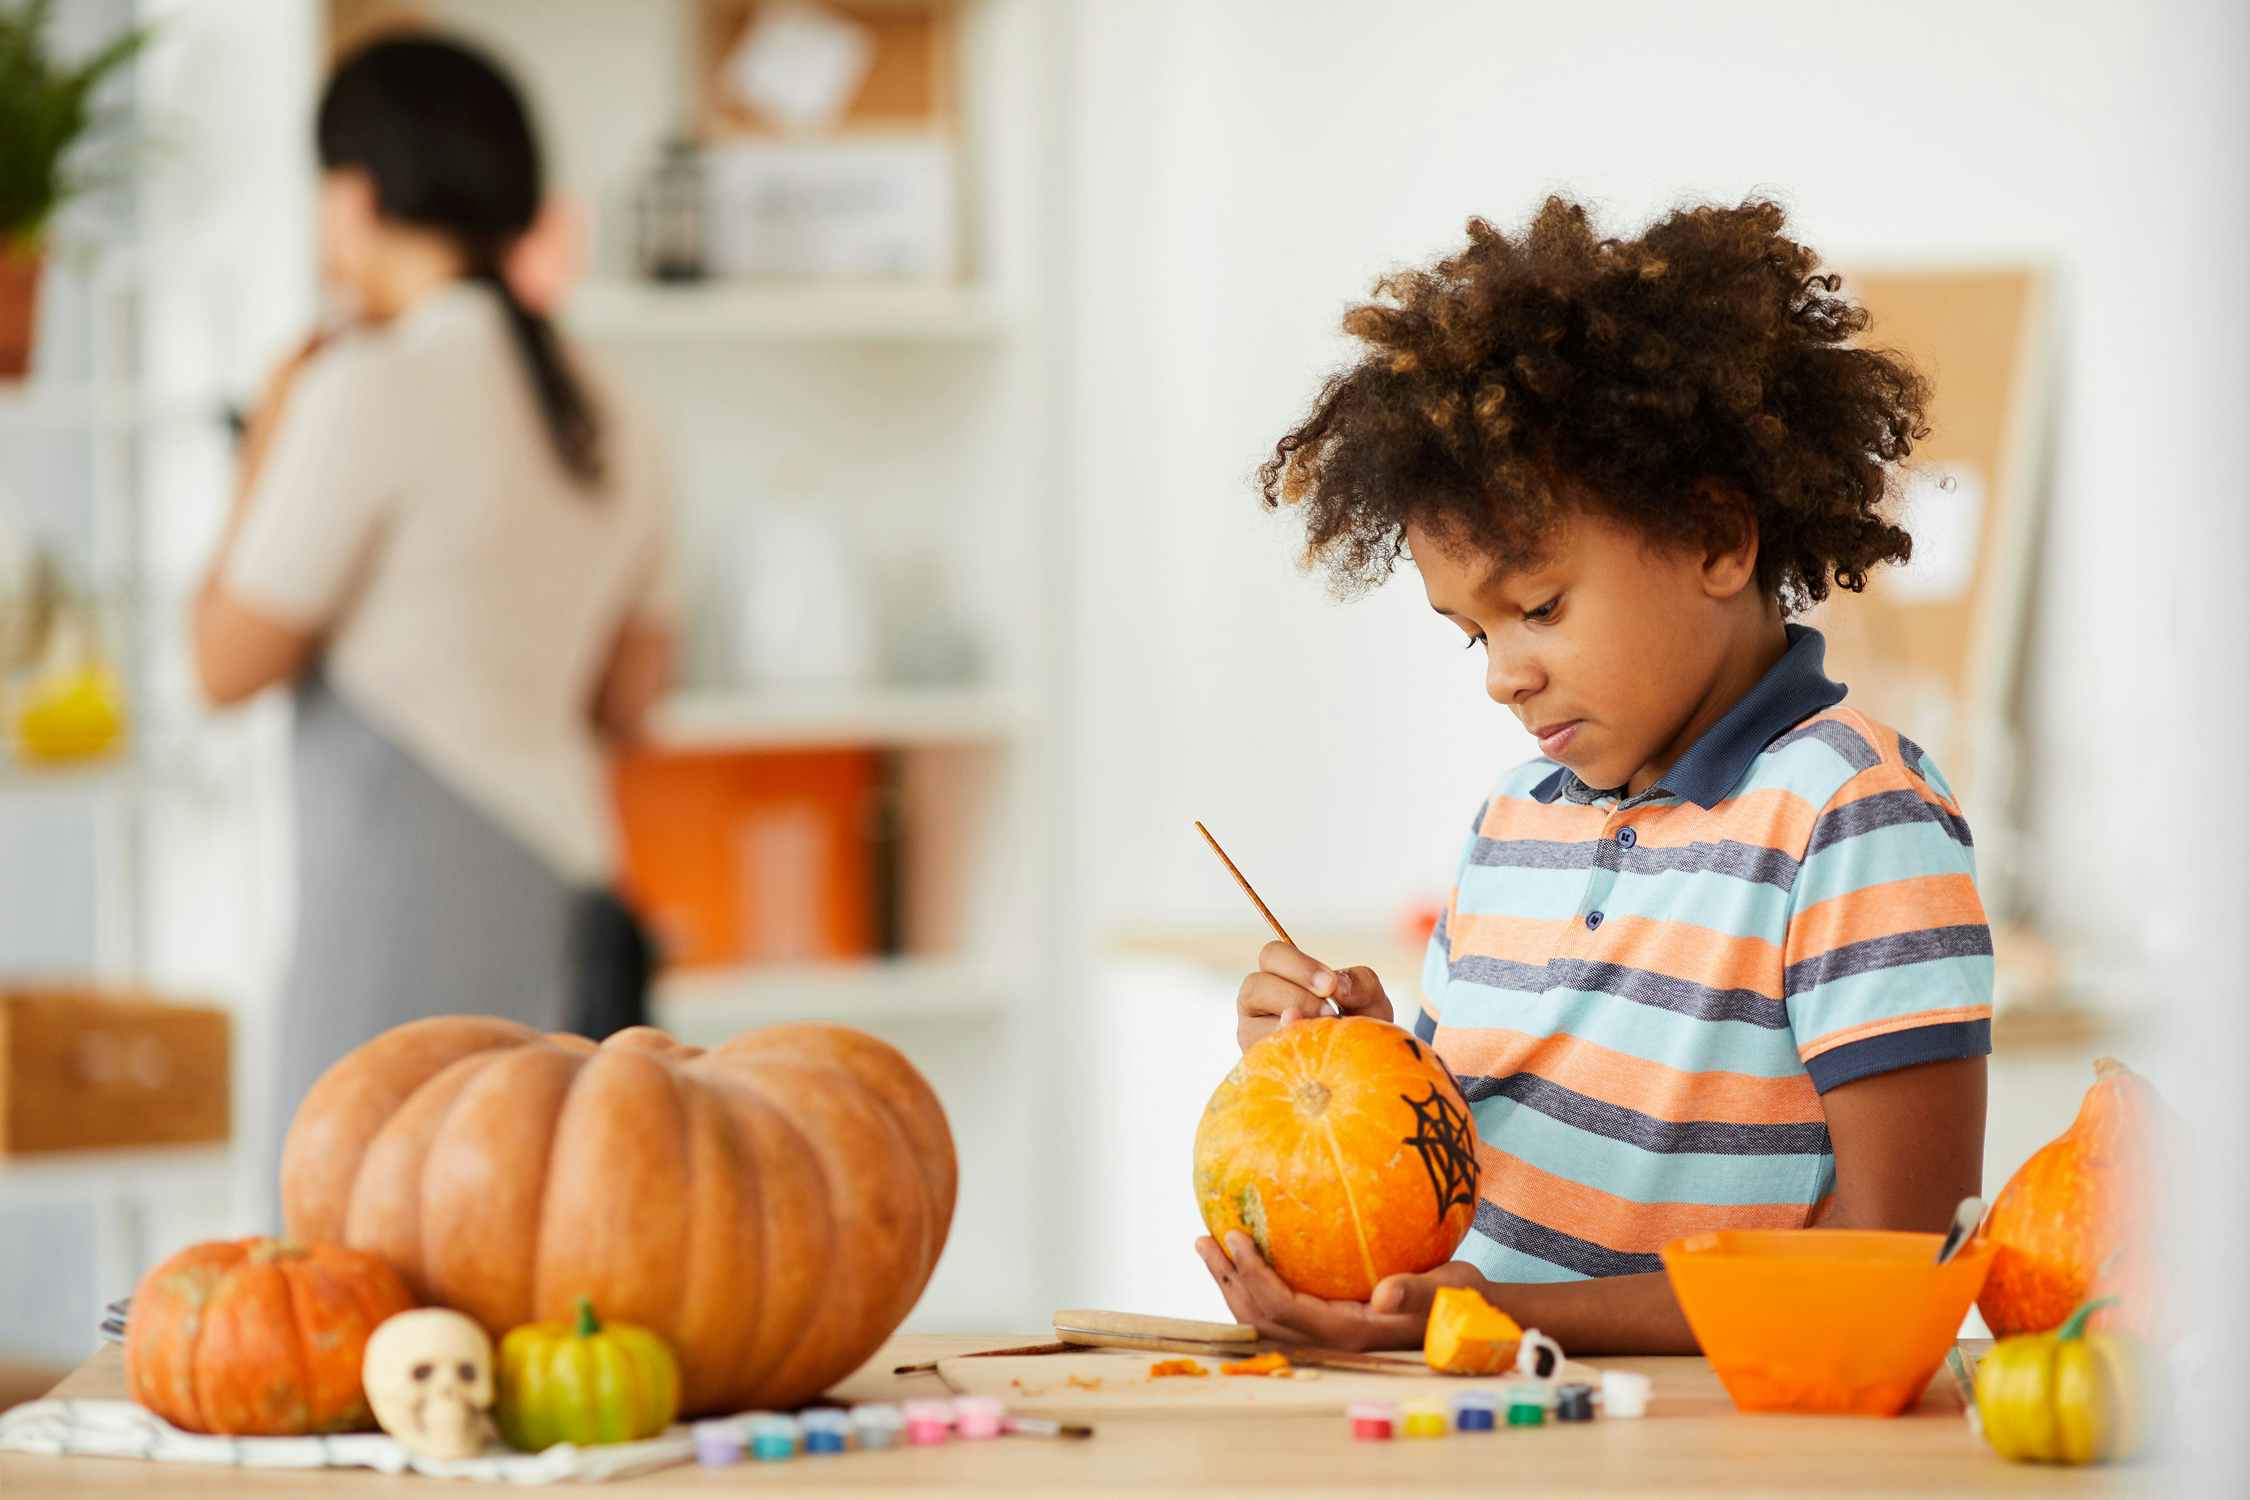 young boy painting pumpkins at home